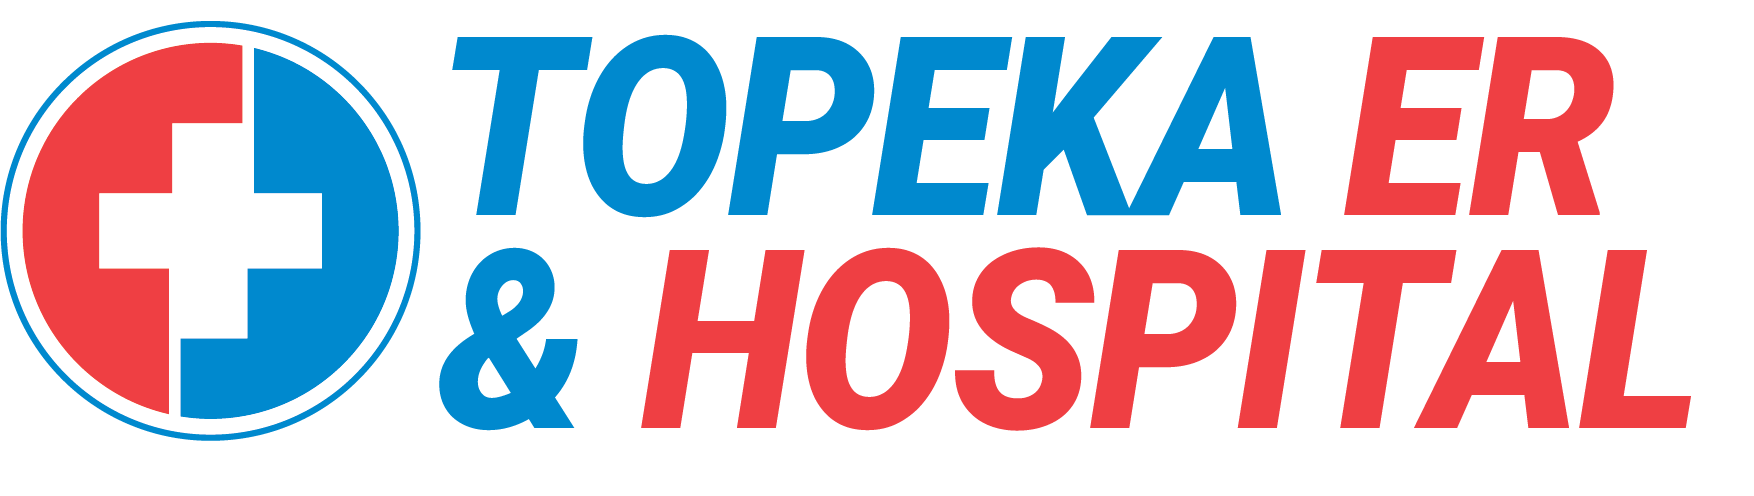 Topeka ER & Hospital